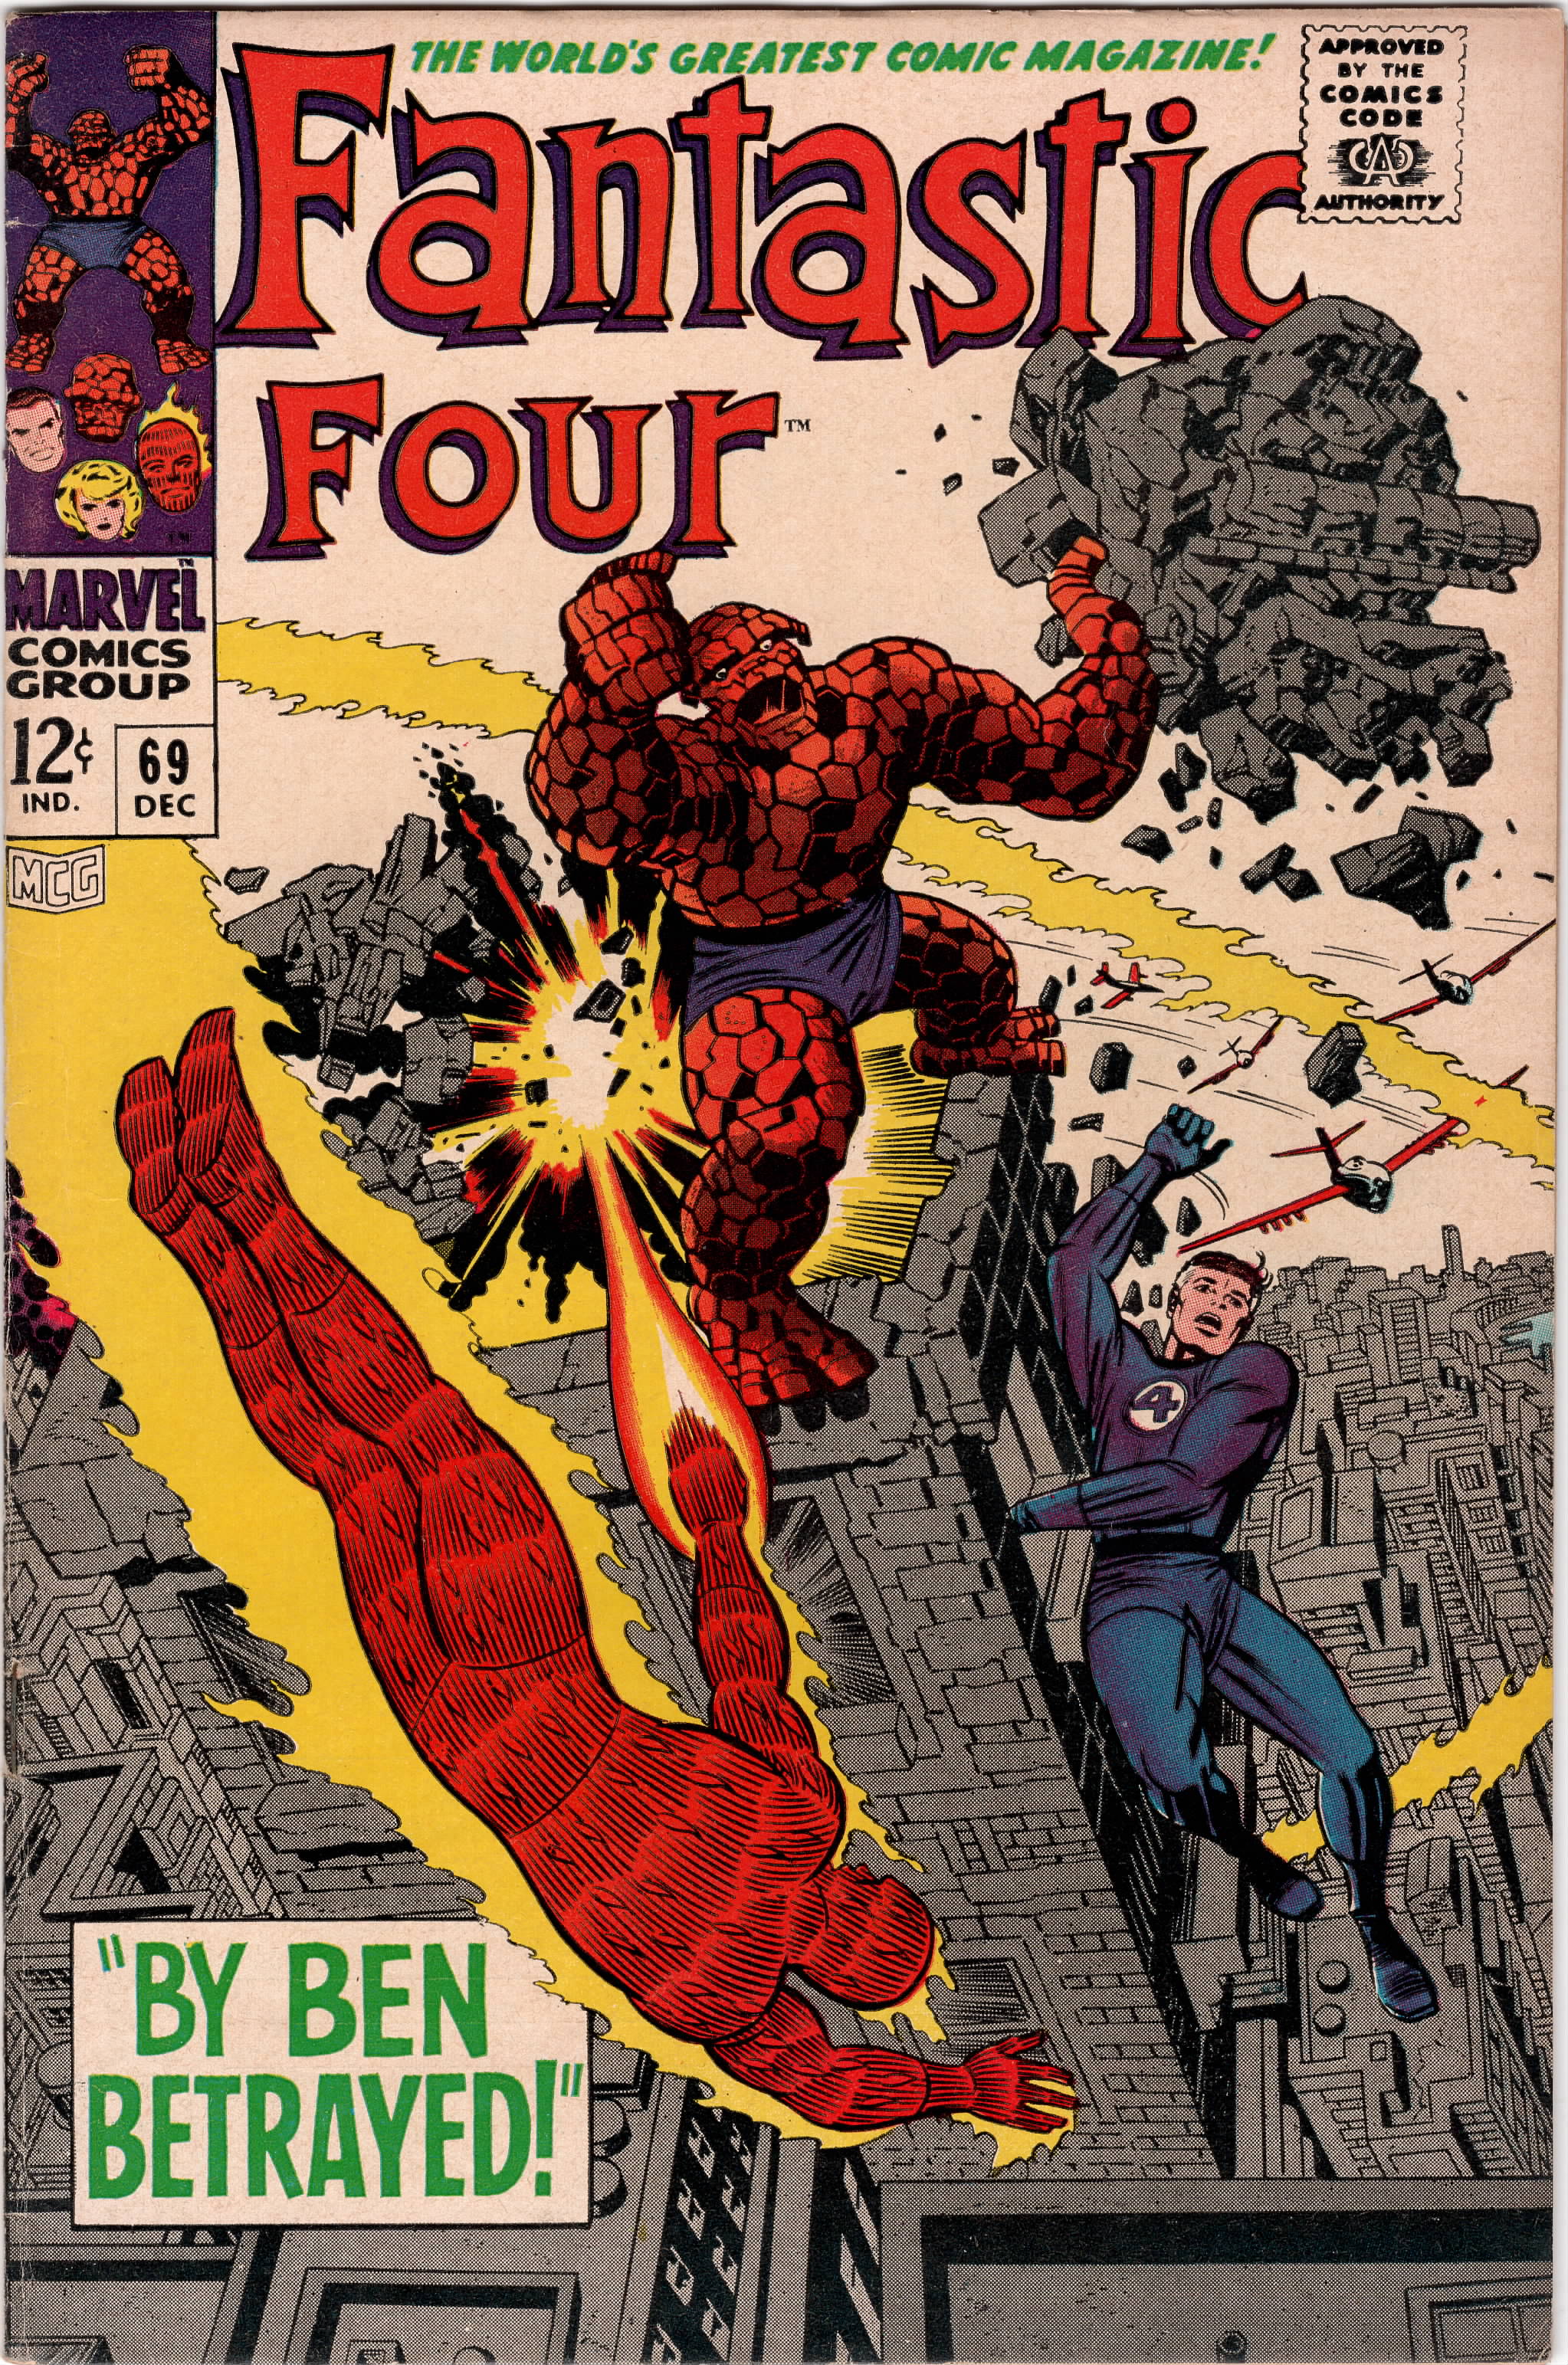 Fantastic Four #069